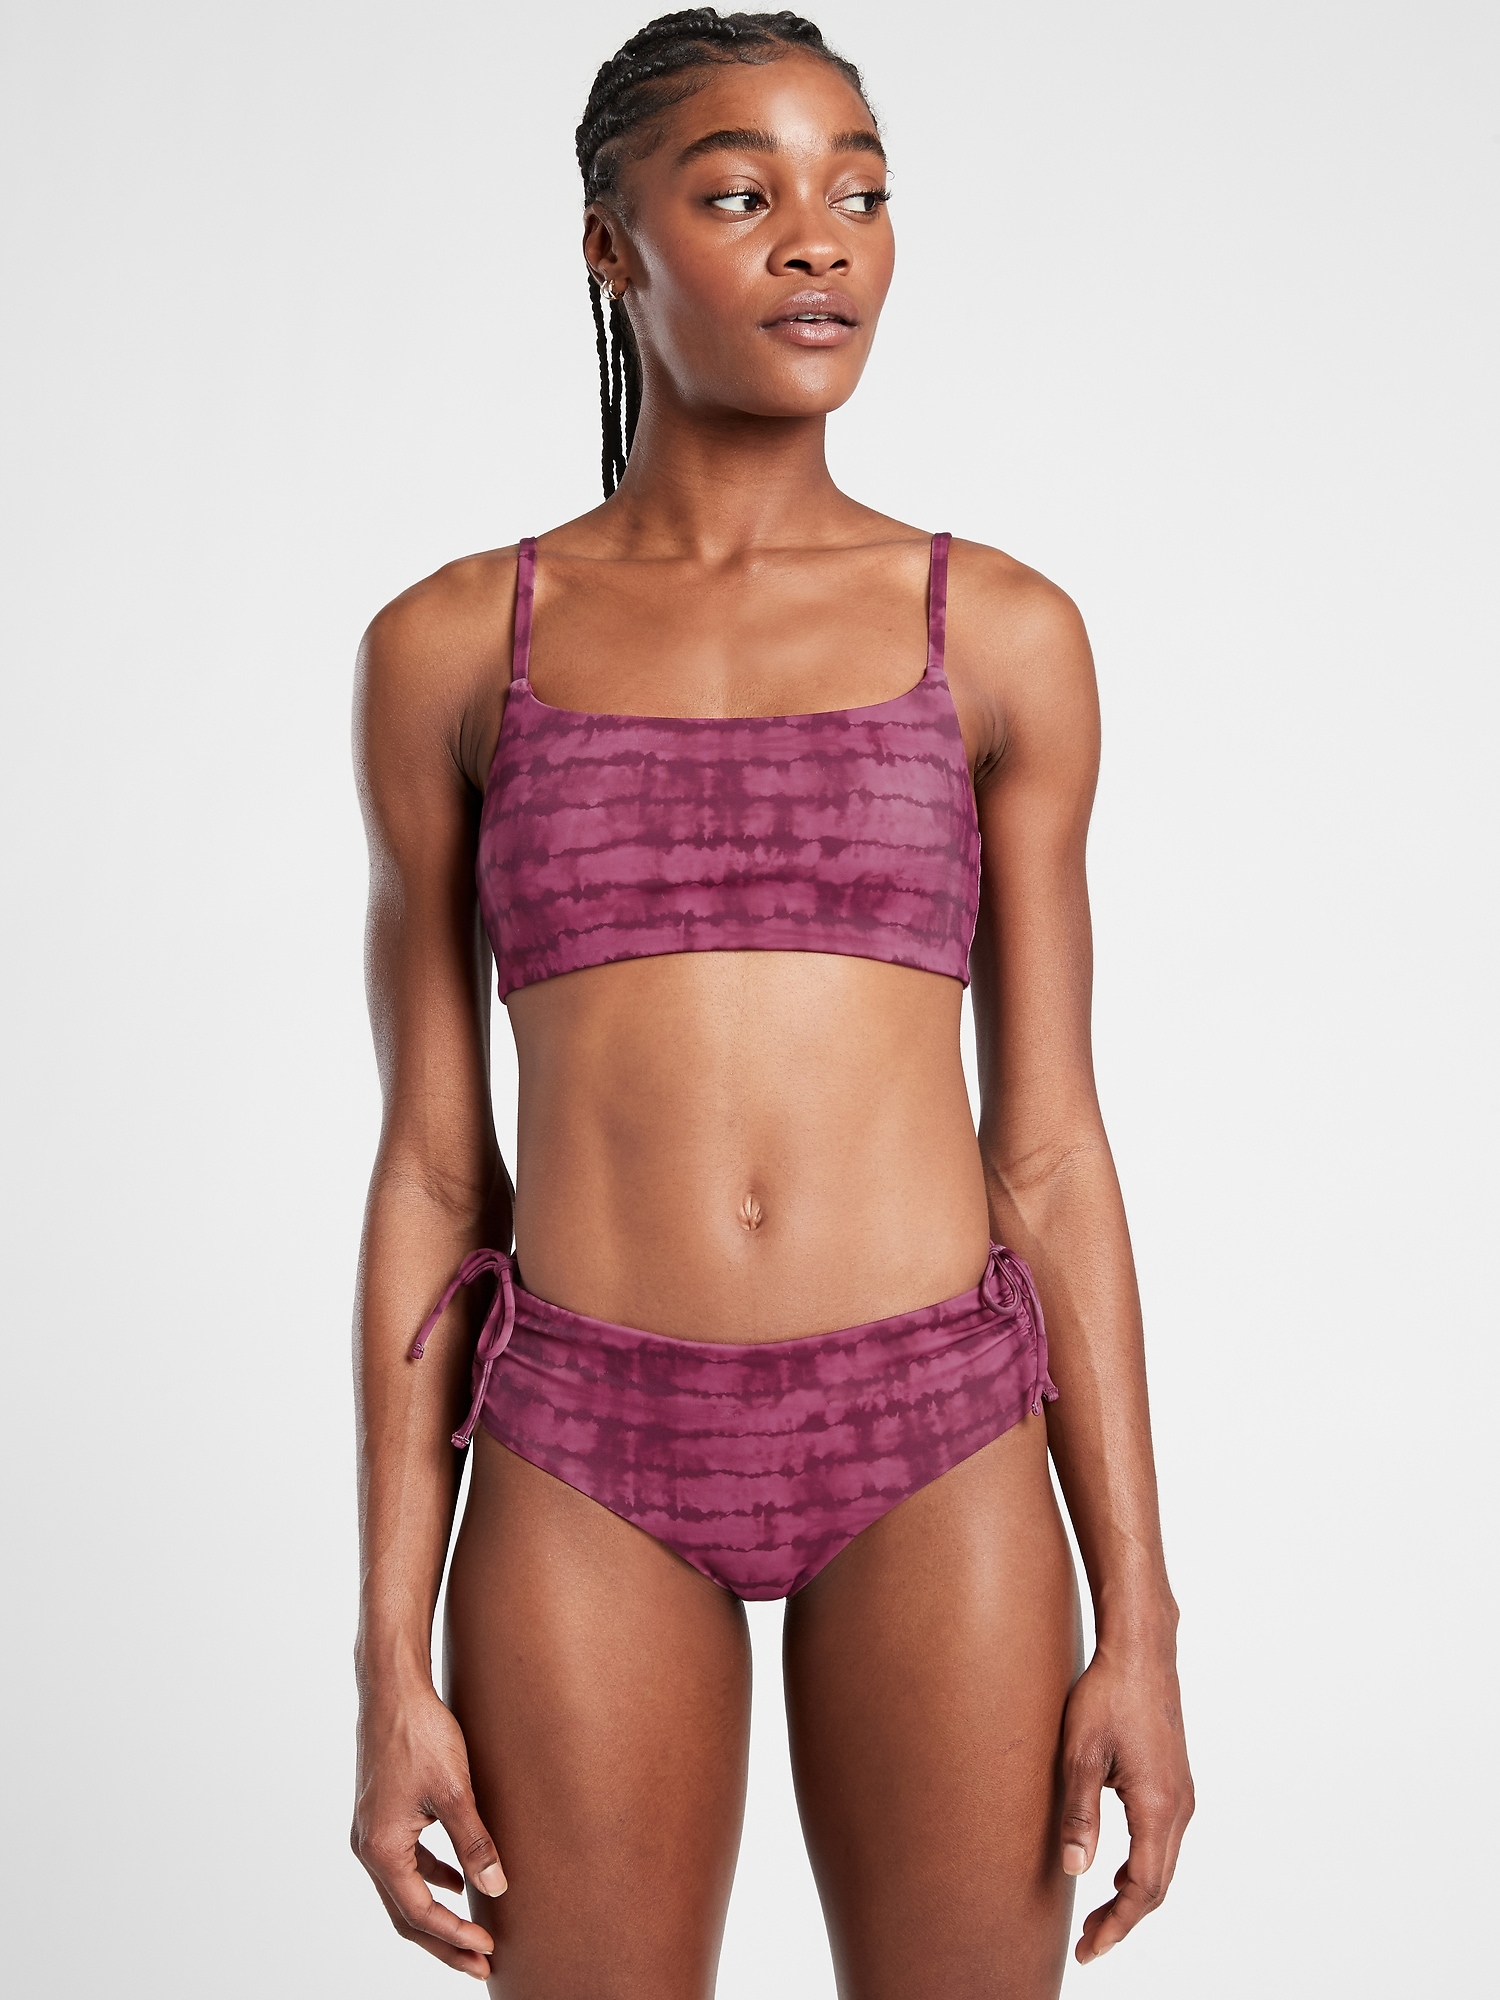 Scoop Printed Bikini Top A-C | Athleta